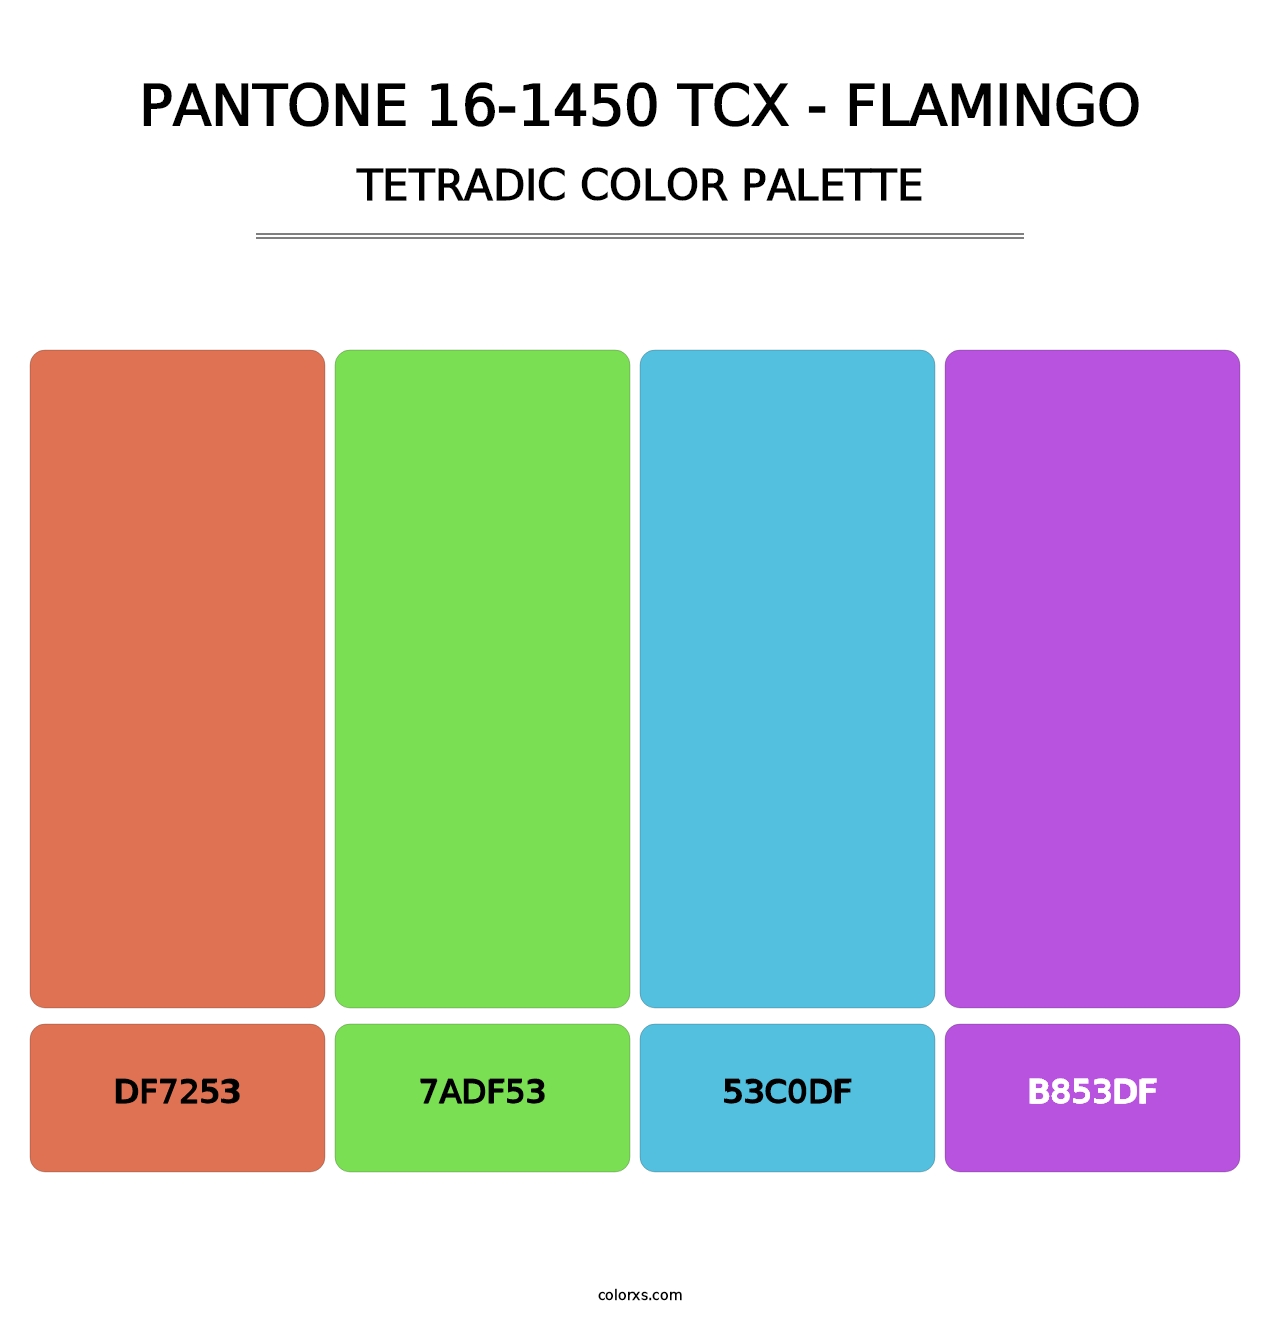 PANTONE 16-1450 TCX - Flamingo - Tetradic Color Palette